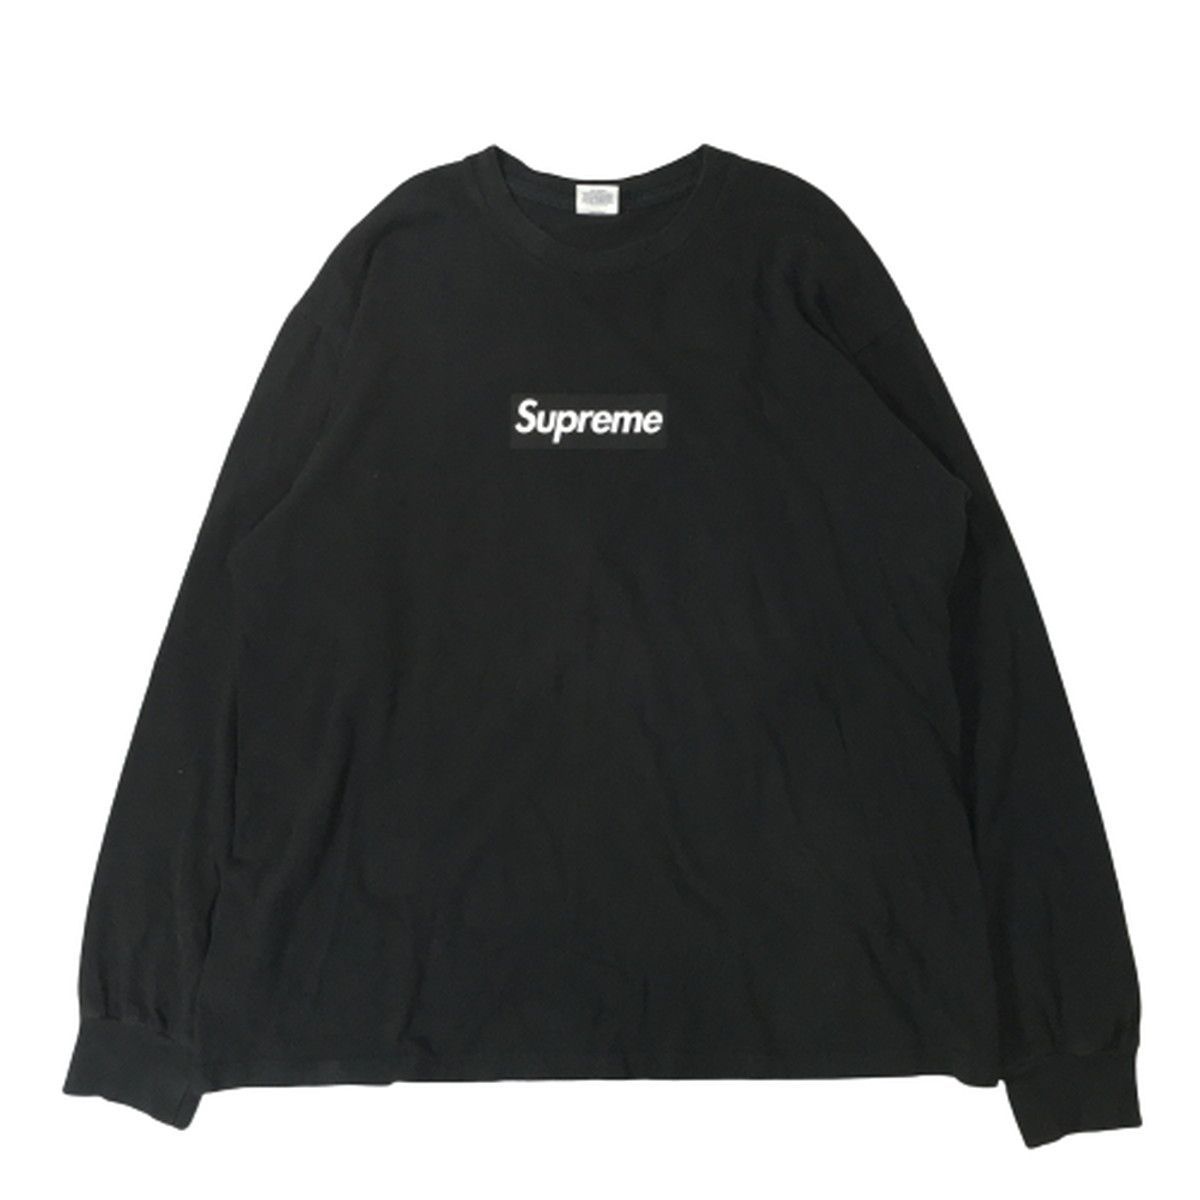 Supreme シュプリーム Box Logo L/S Tee 20AW ロング Tシャツ ロンT ボックスロゴ ブラック 黒 長袖 L  宅急便かクリックポスト